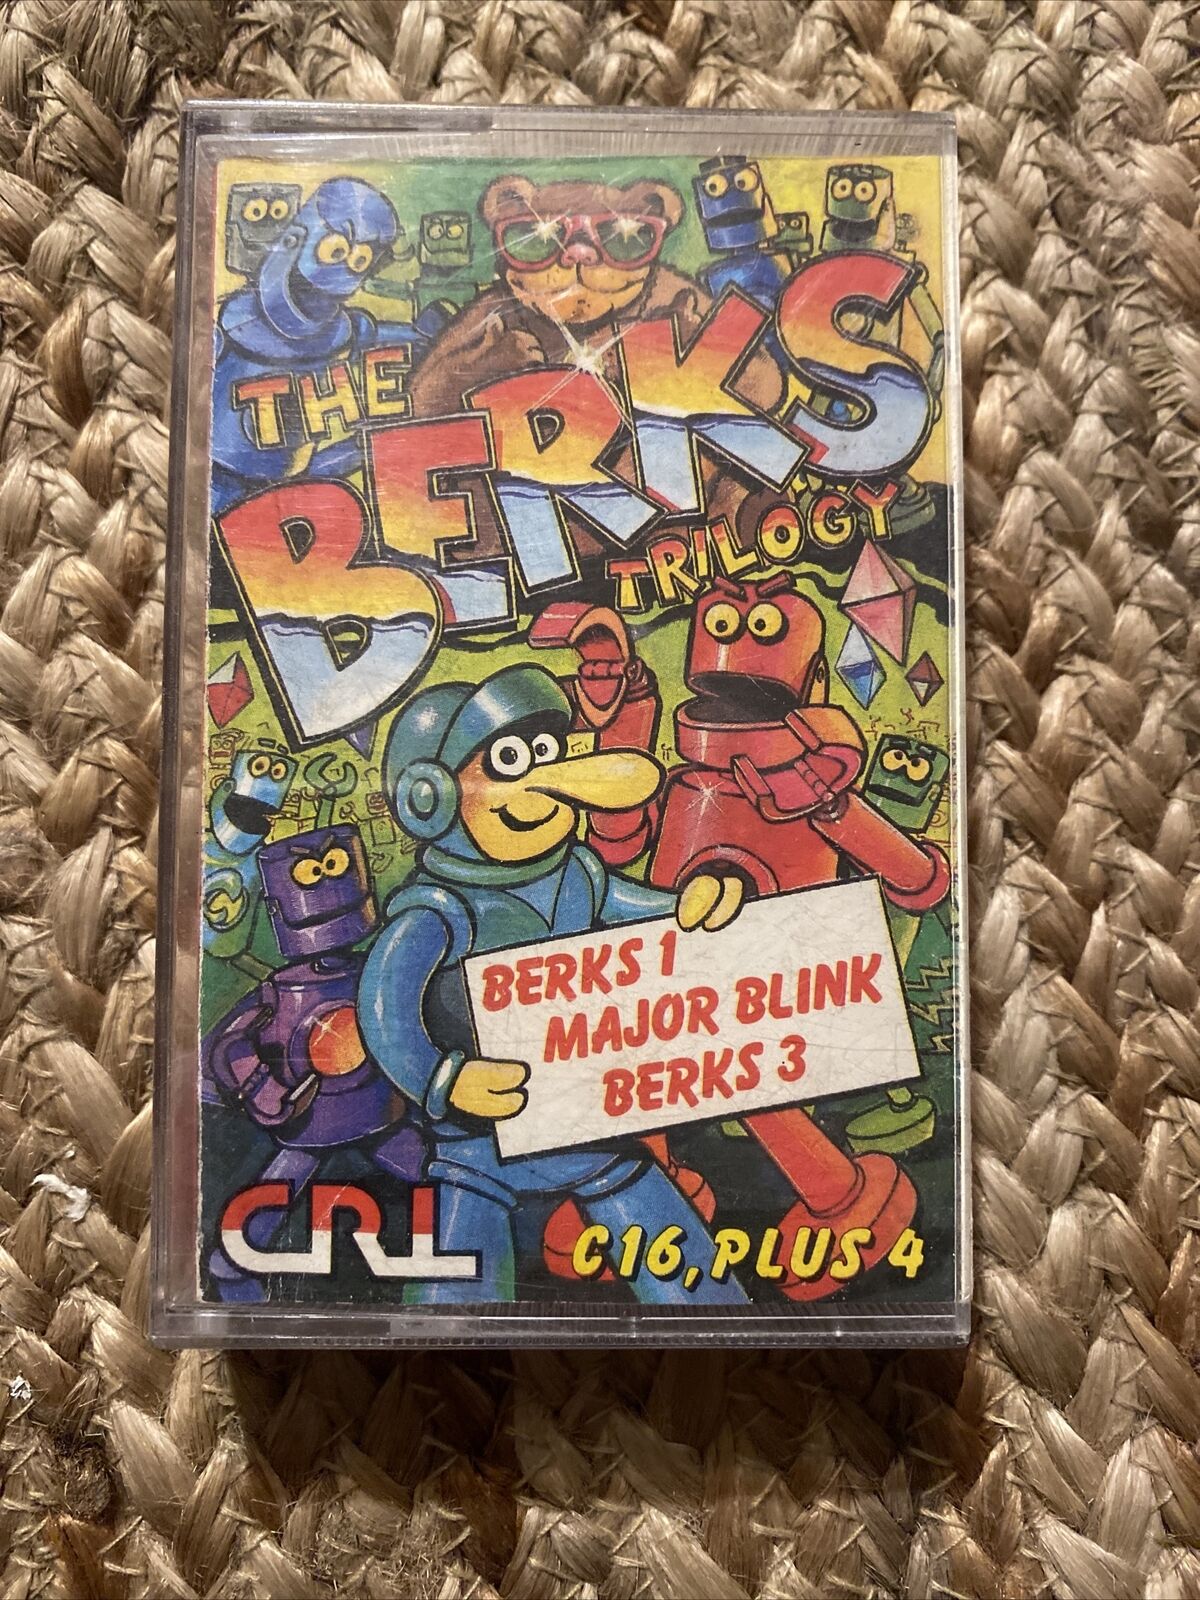 The Berks Trilogy Cassette In Case Commodore C16, Plus 4